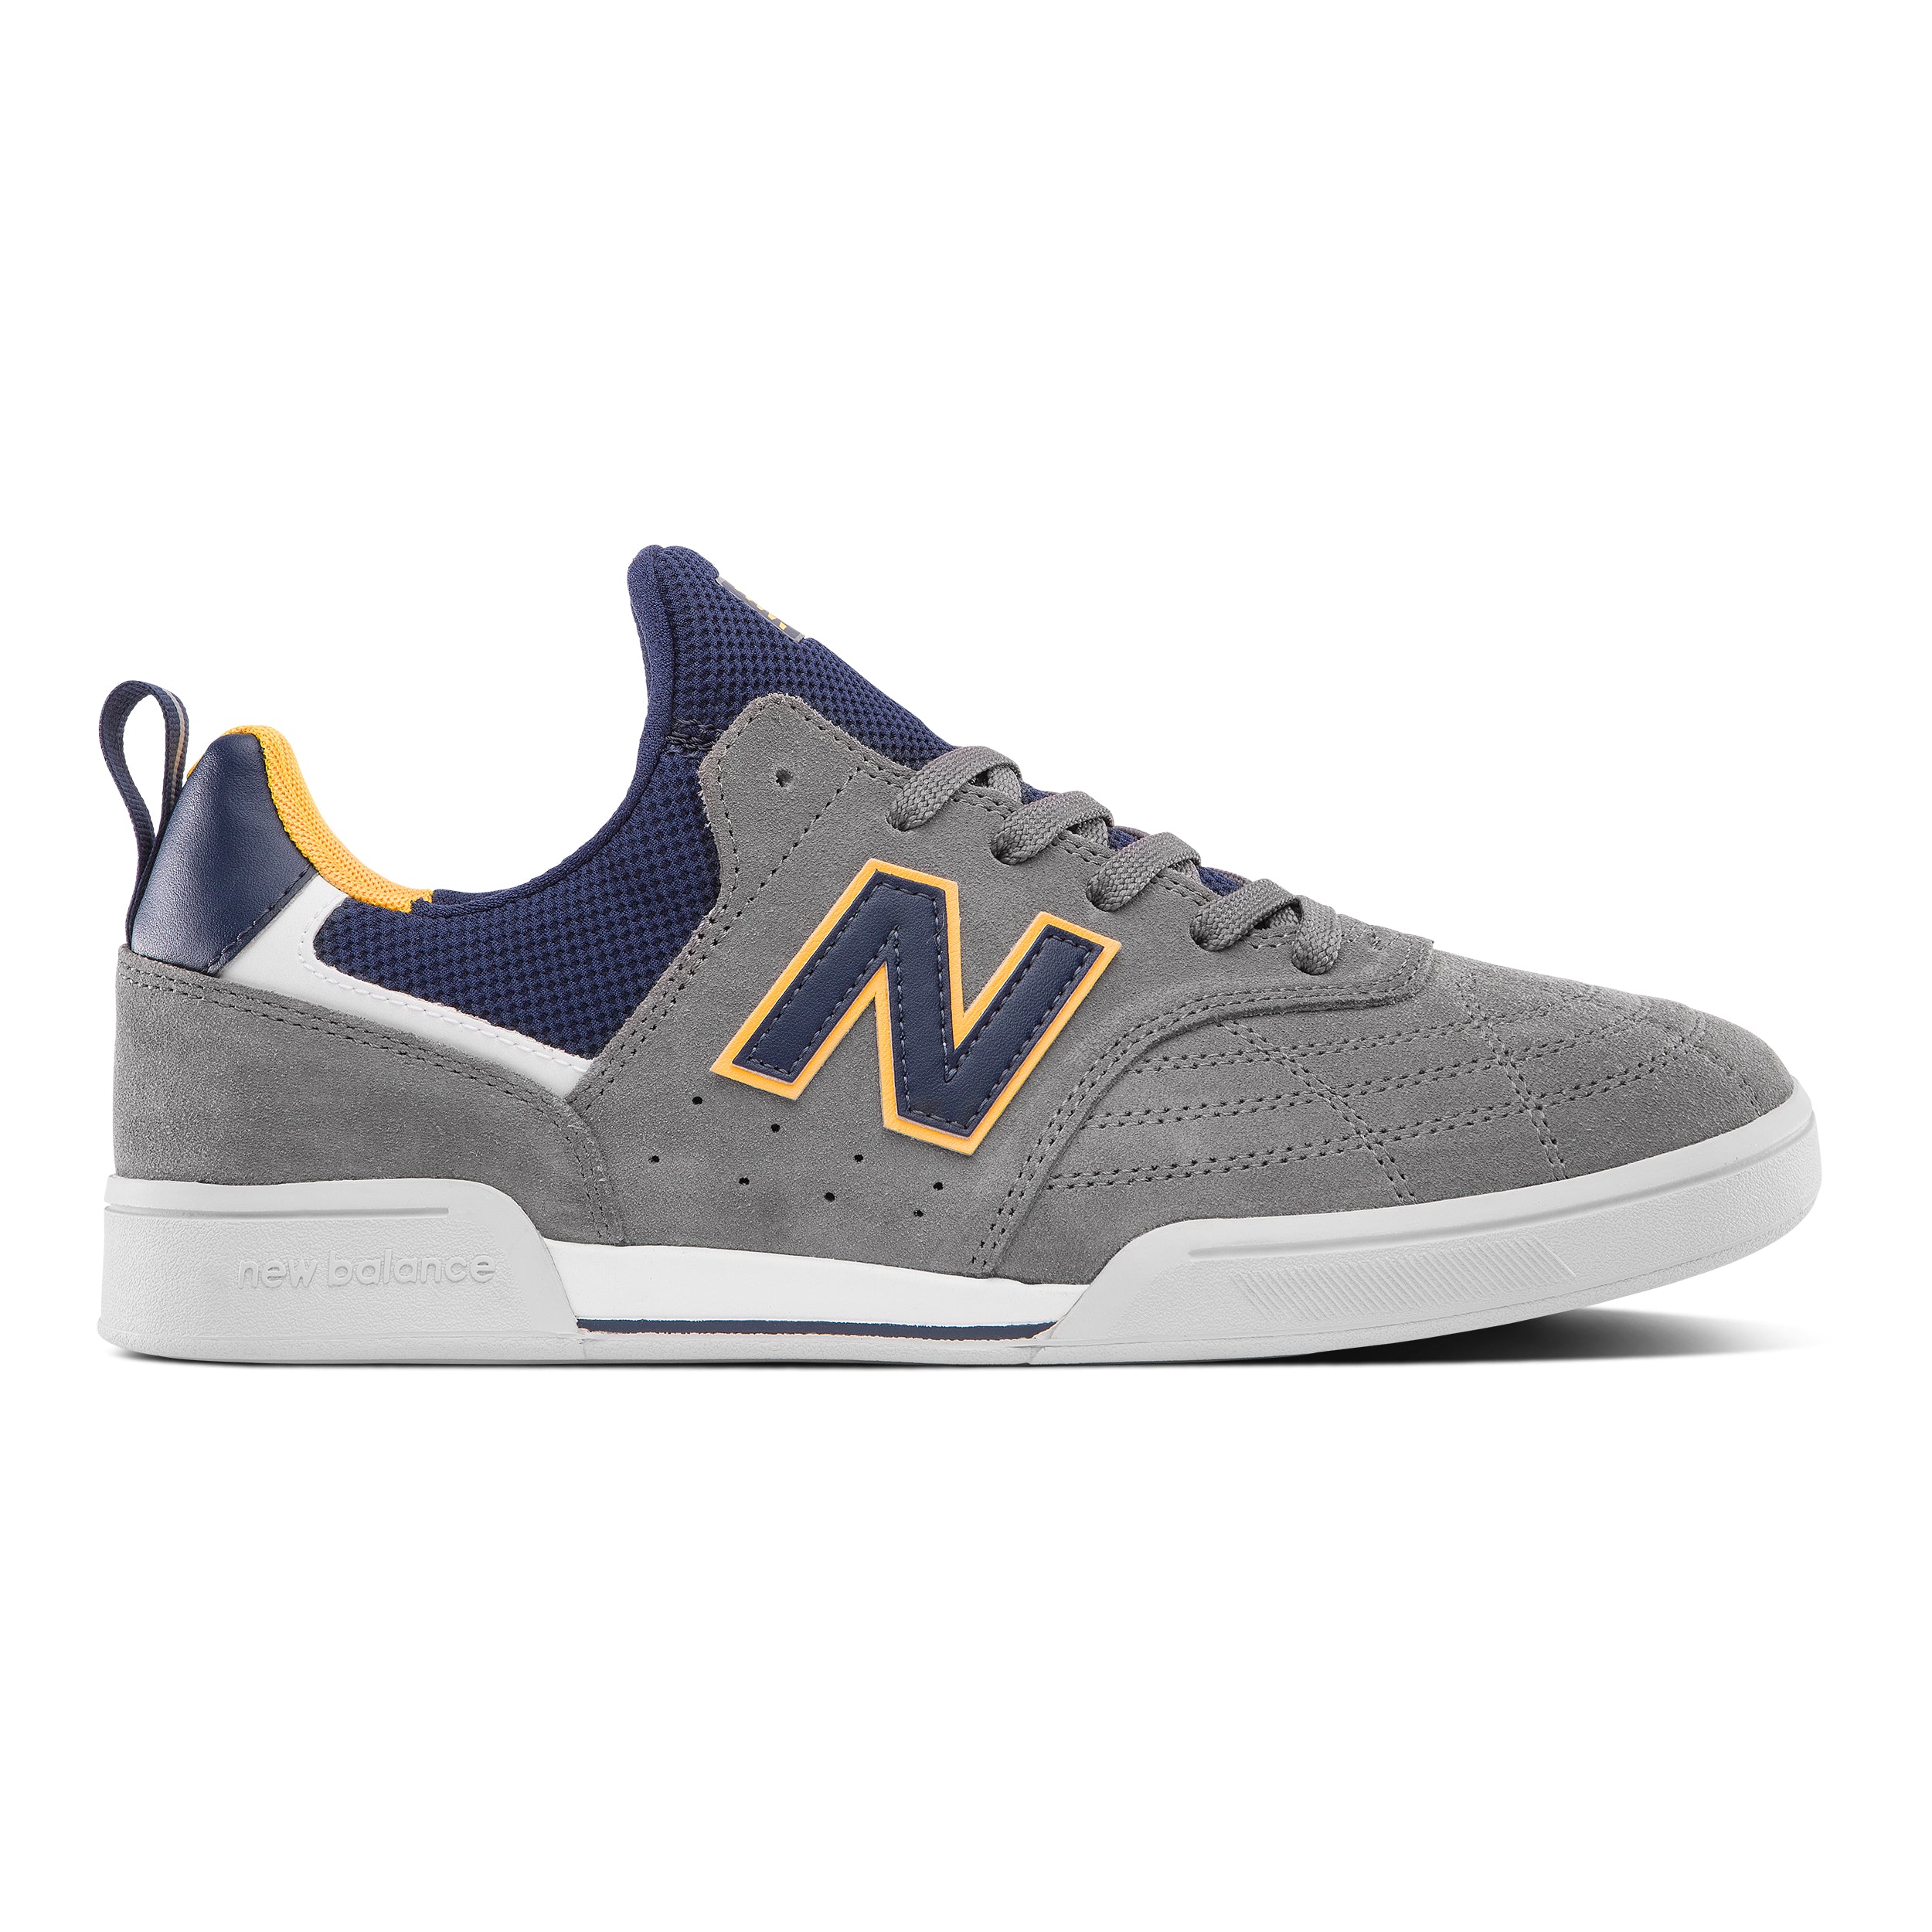 Grey/Navy NM288 Sport NB Numeric Skateboard Shoe